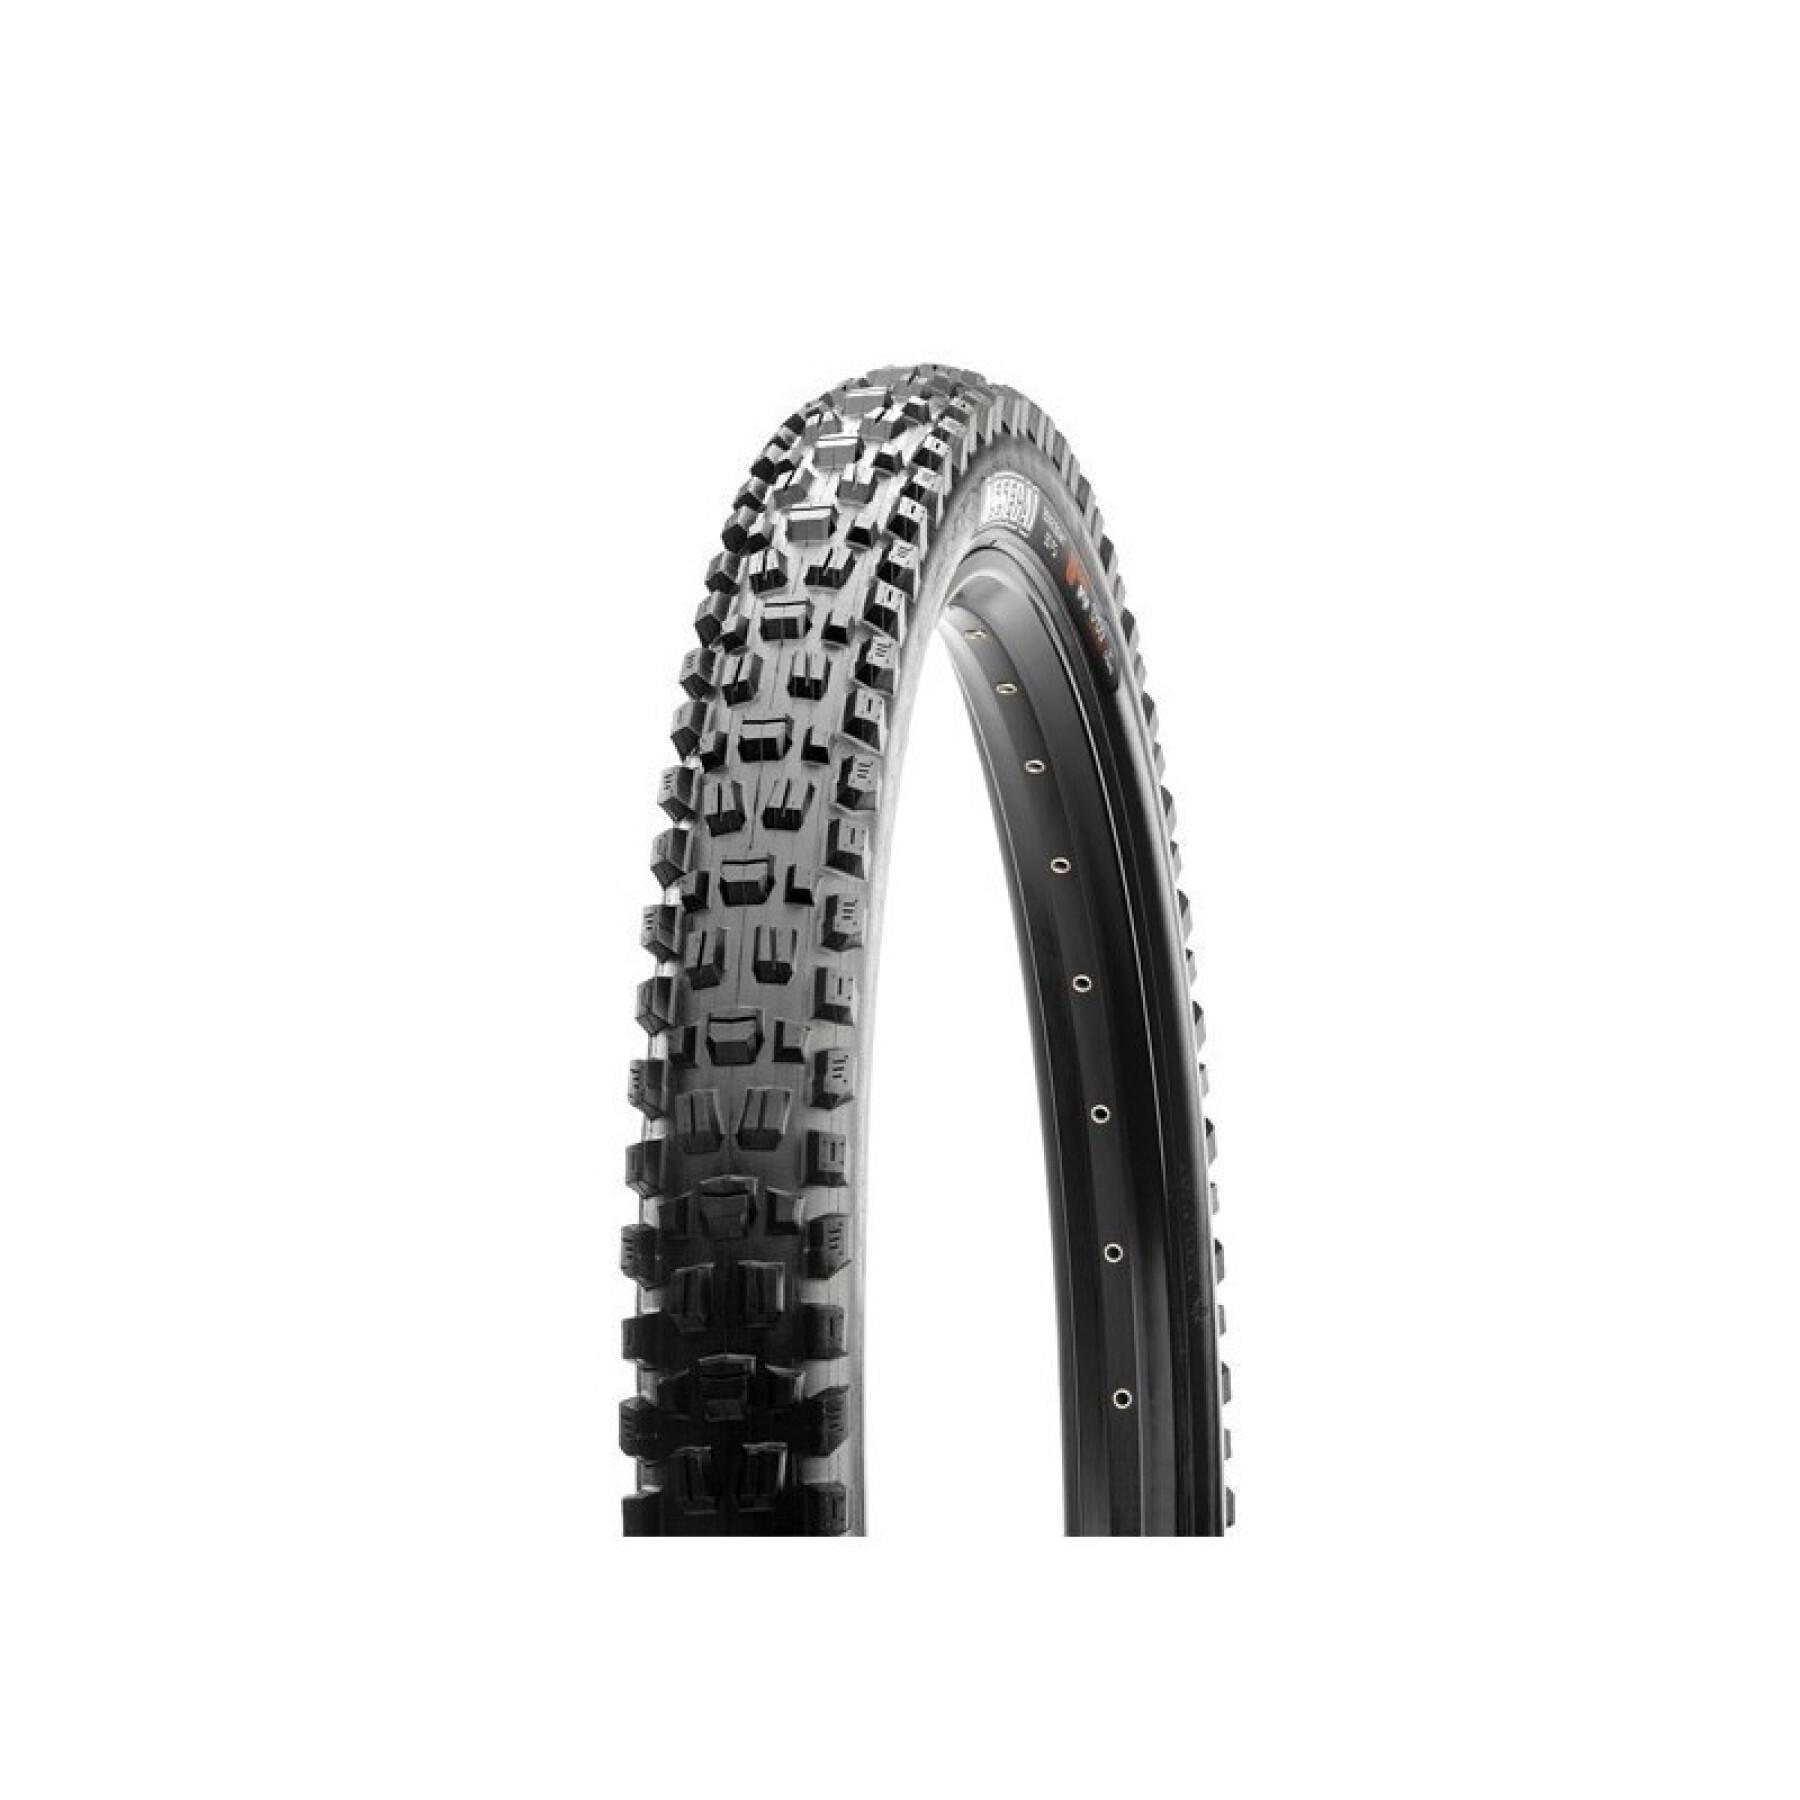 Soft tire Maxxis Assegai WT (Wide Trail) 3C Grip / Exo + / Tubeless Ready